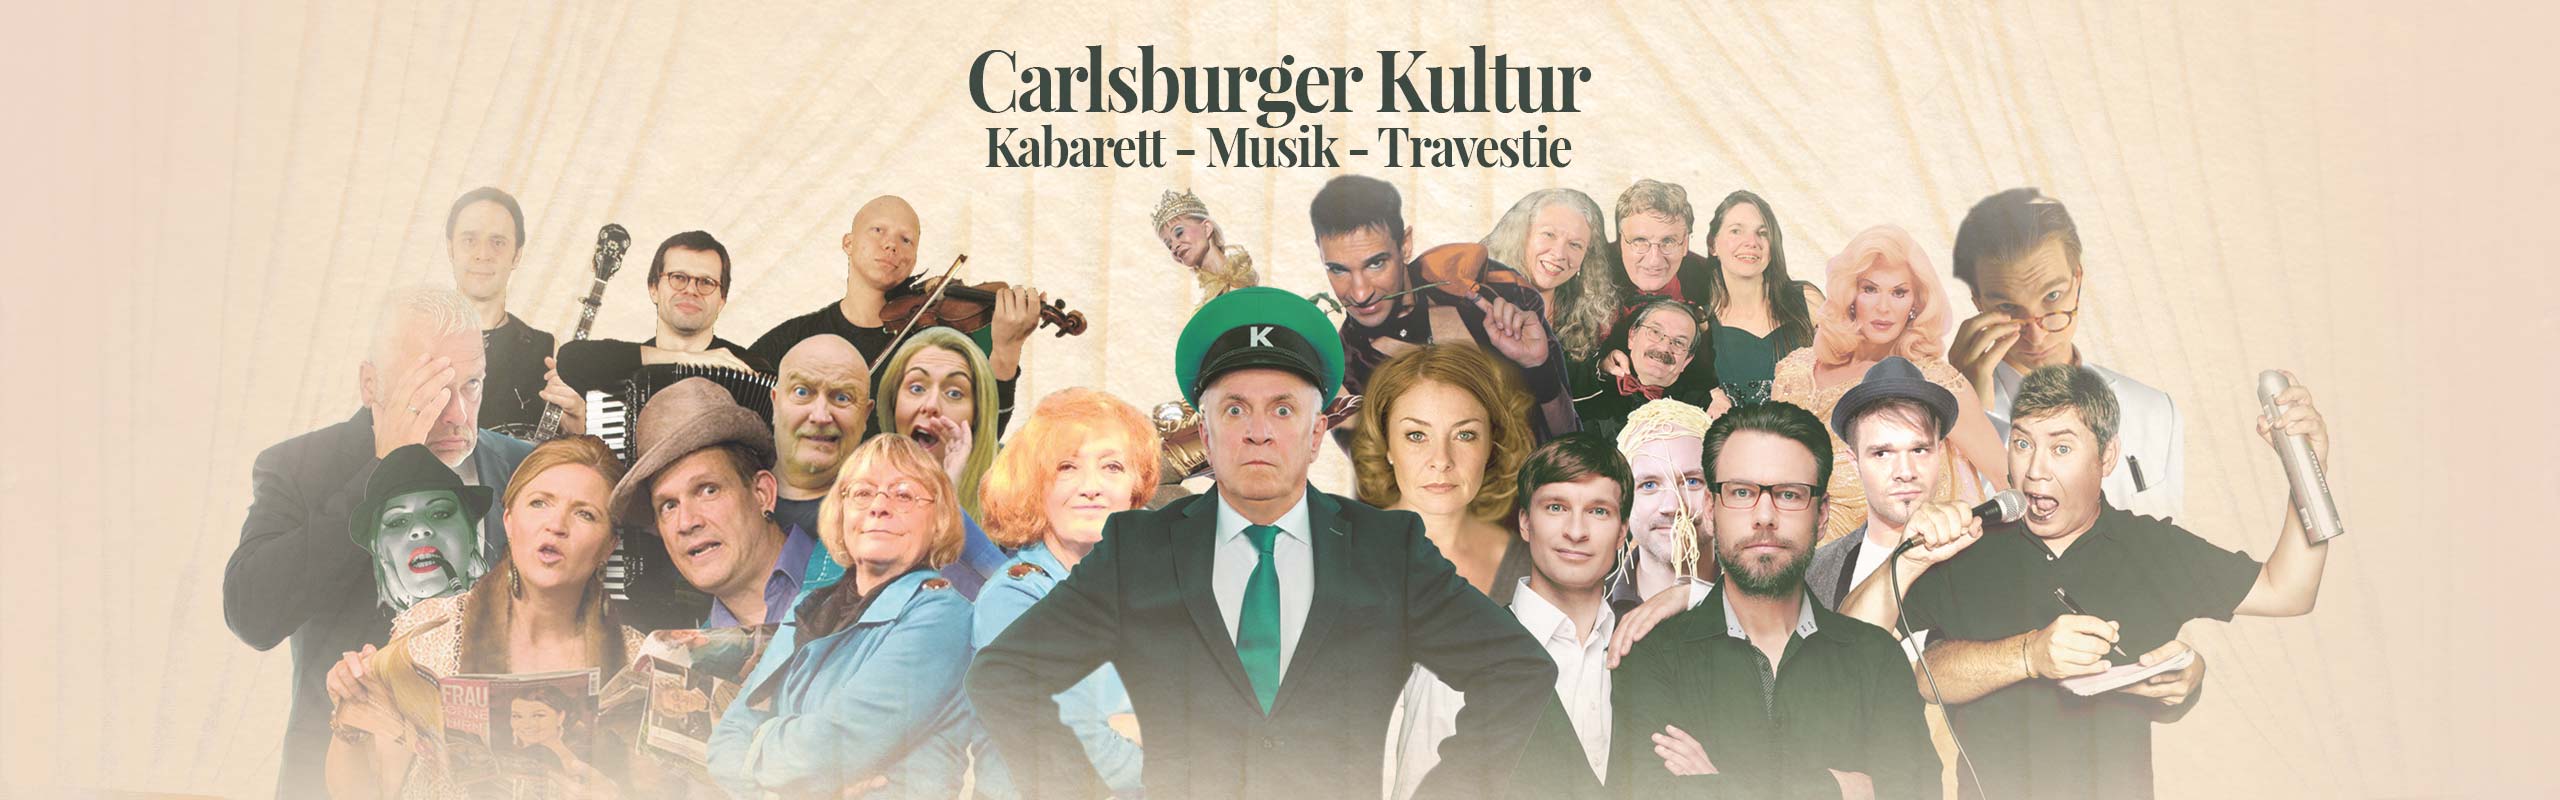 Carlsburg Kultur